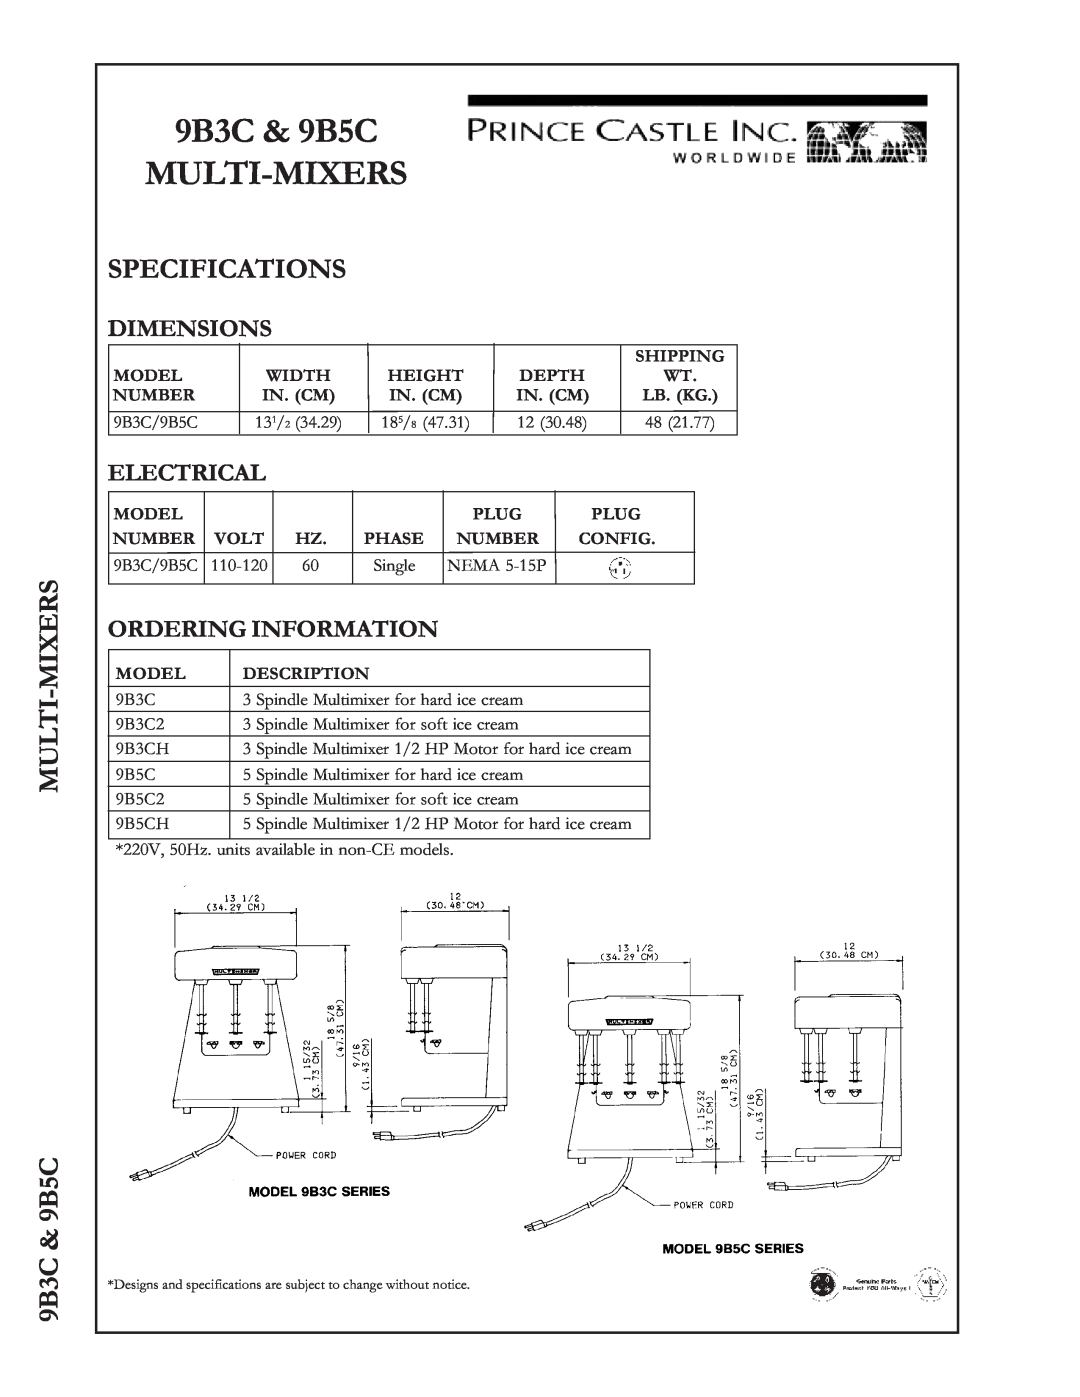 Prince Castle warranty MULTI-MIXERS 9B3C & 9B5C, Specifications, 9B3C & 9B5C MULTI-MIXERS, Dimensions, Electrical 